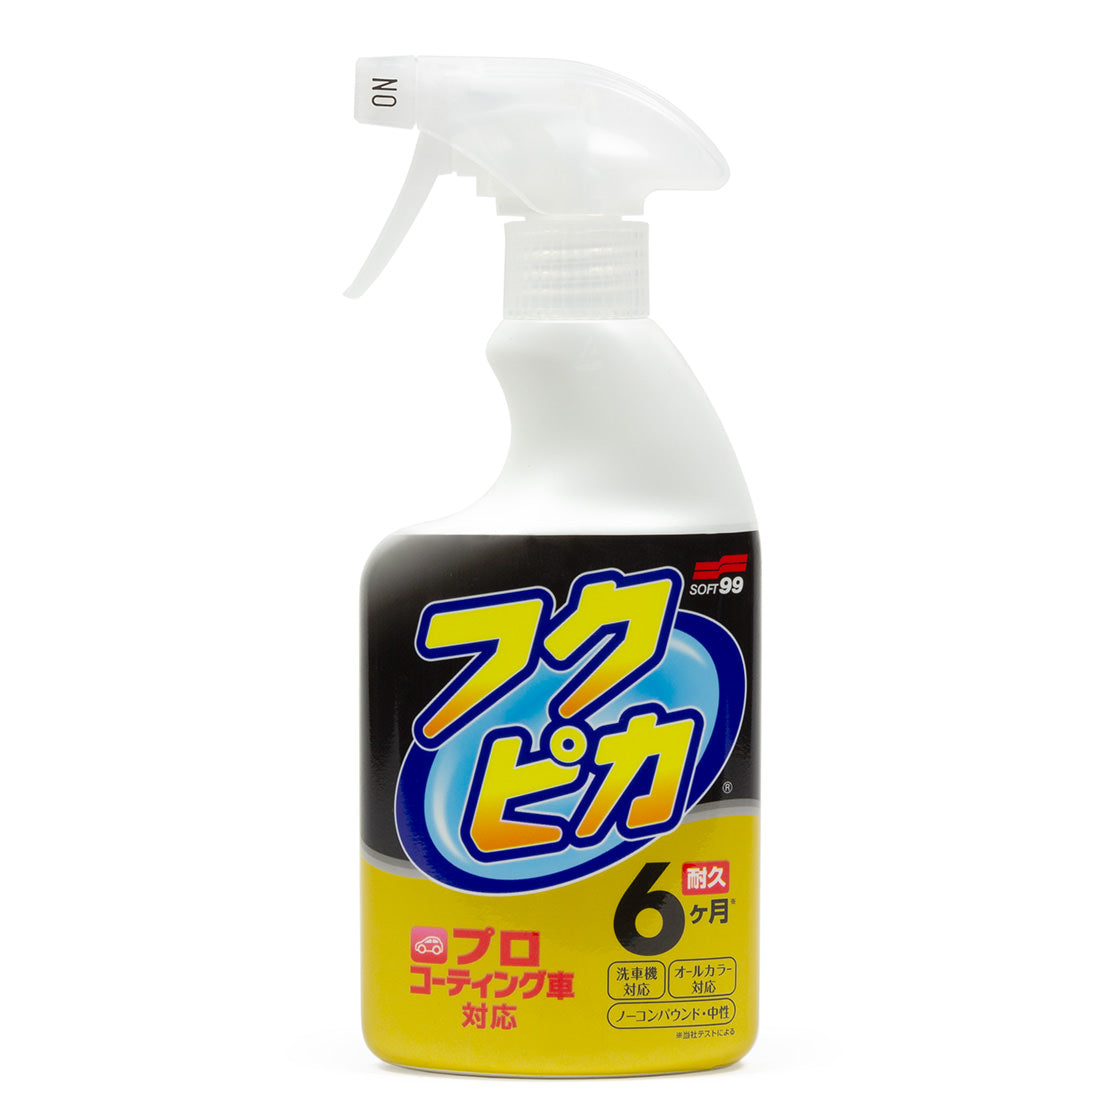 SOFT99 Fukupika Spray Advance (Strong Type)